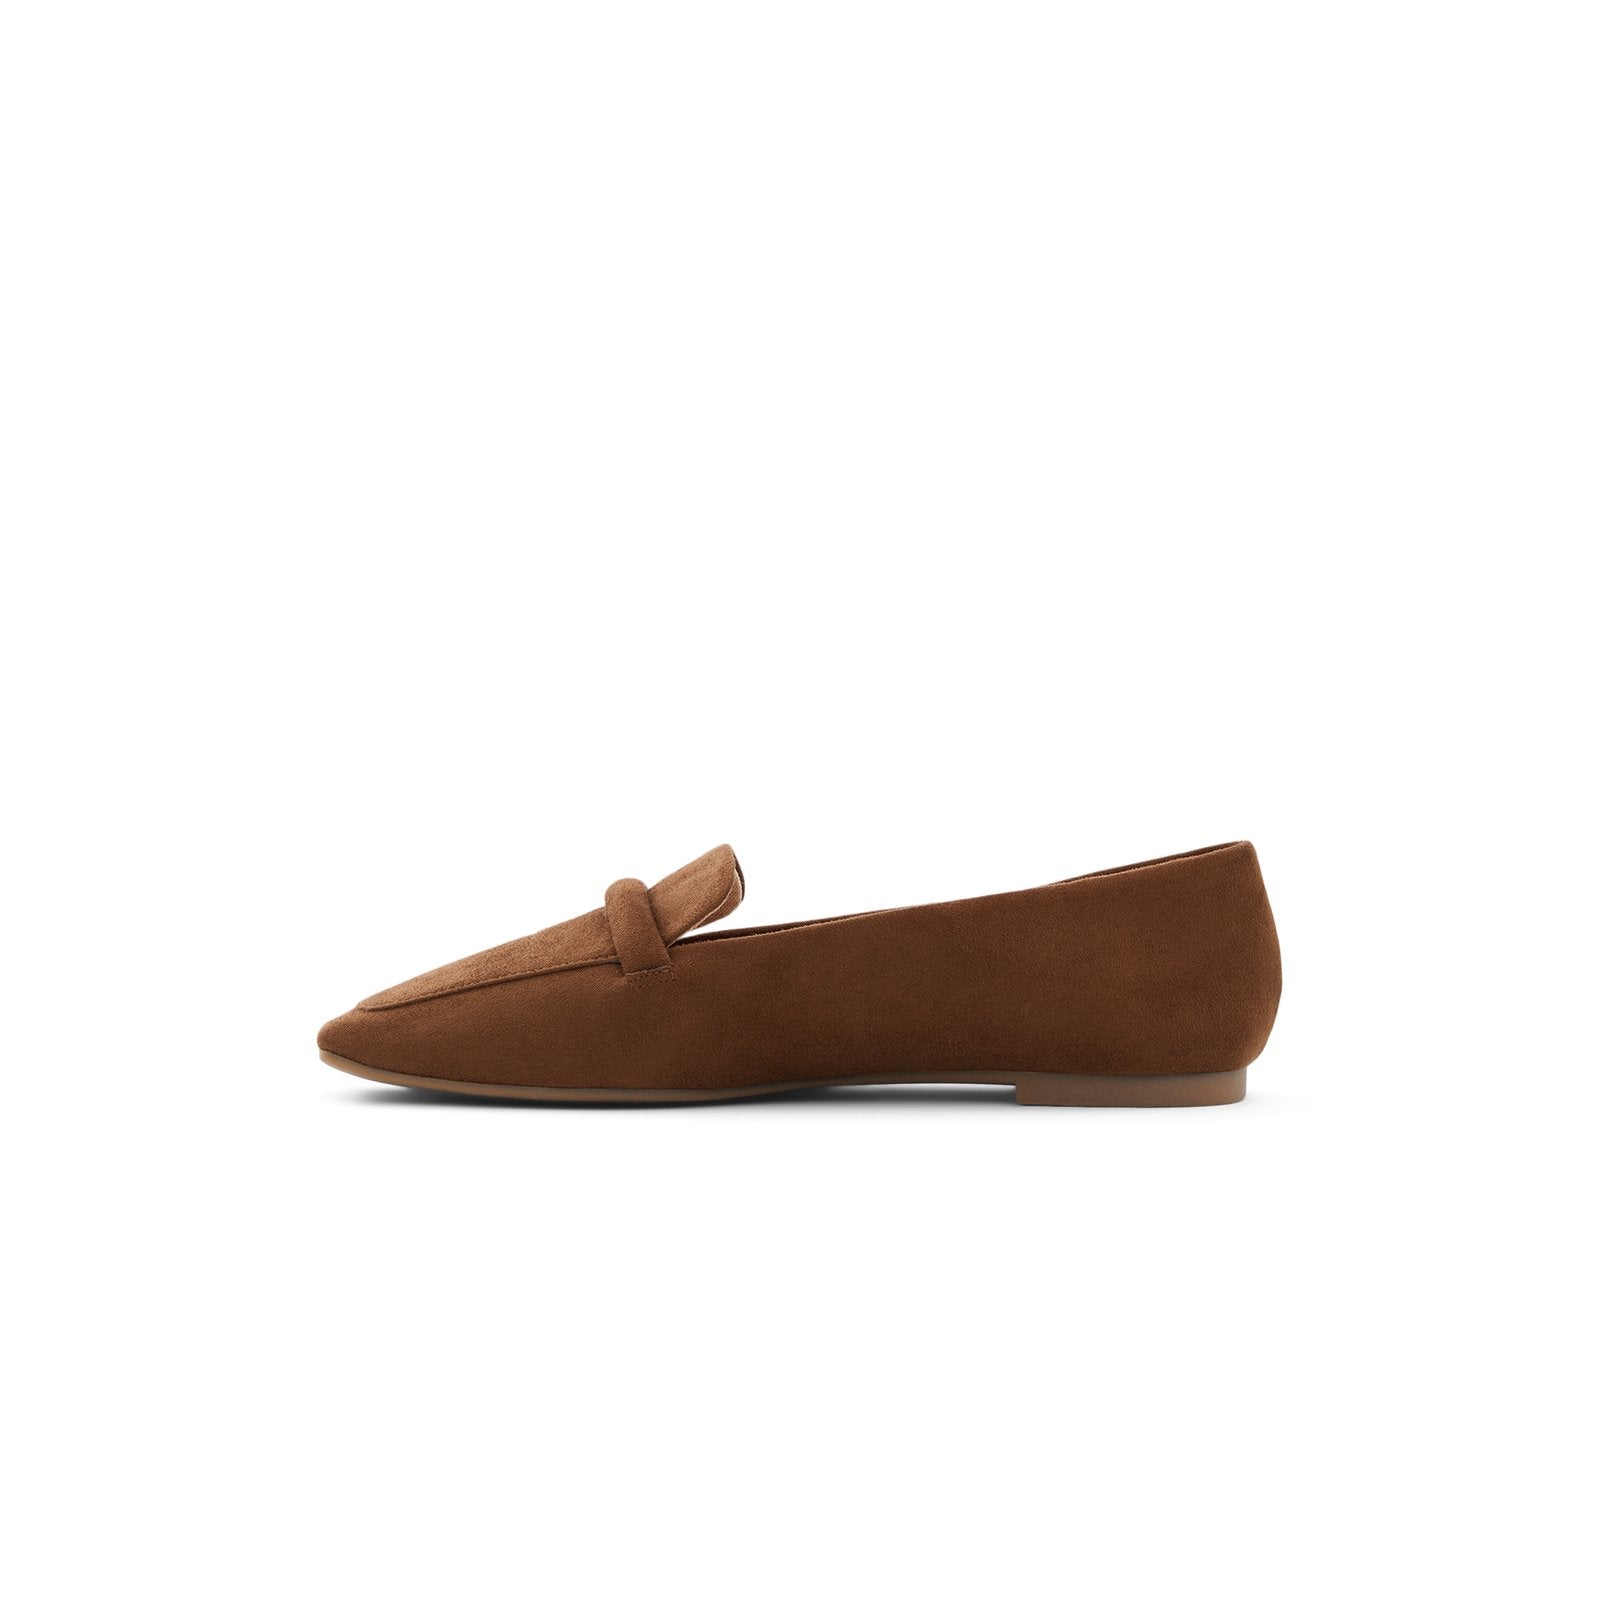 Ammaria / Shoes Women Shoes - Dark Brown - CALL IT SPRING KSA